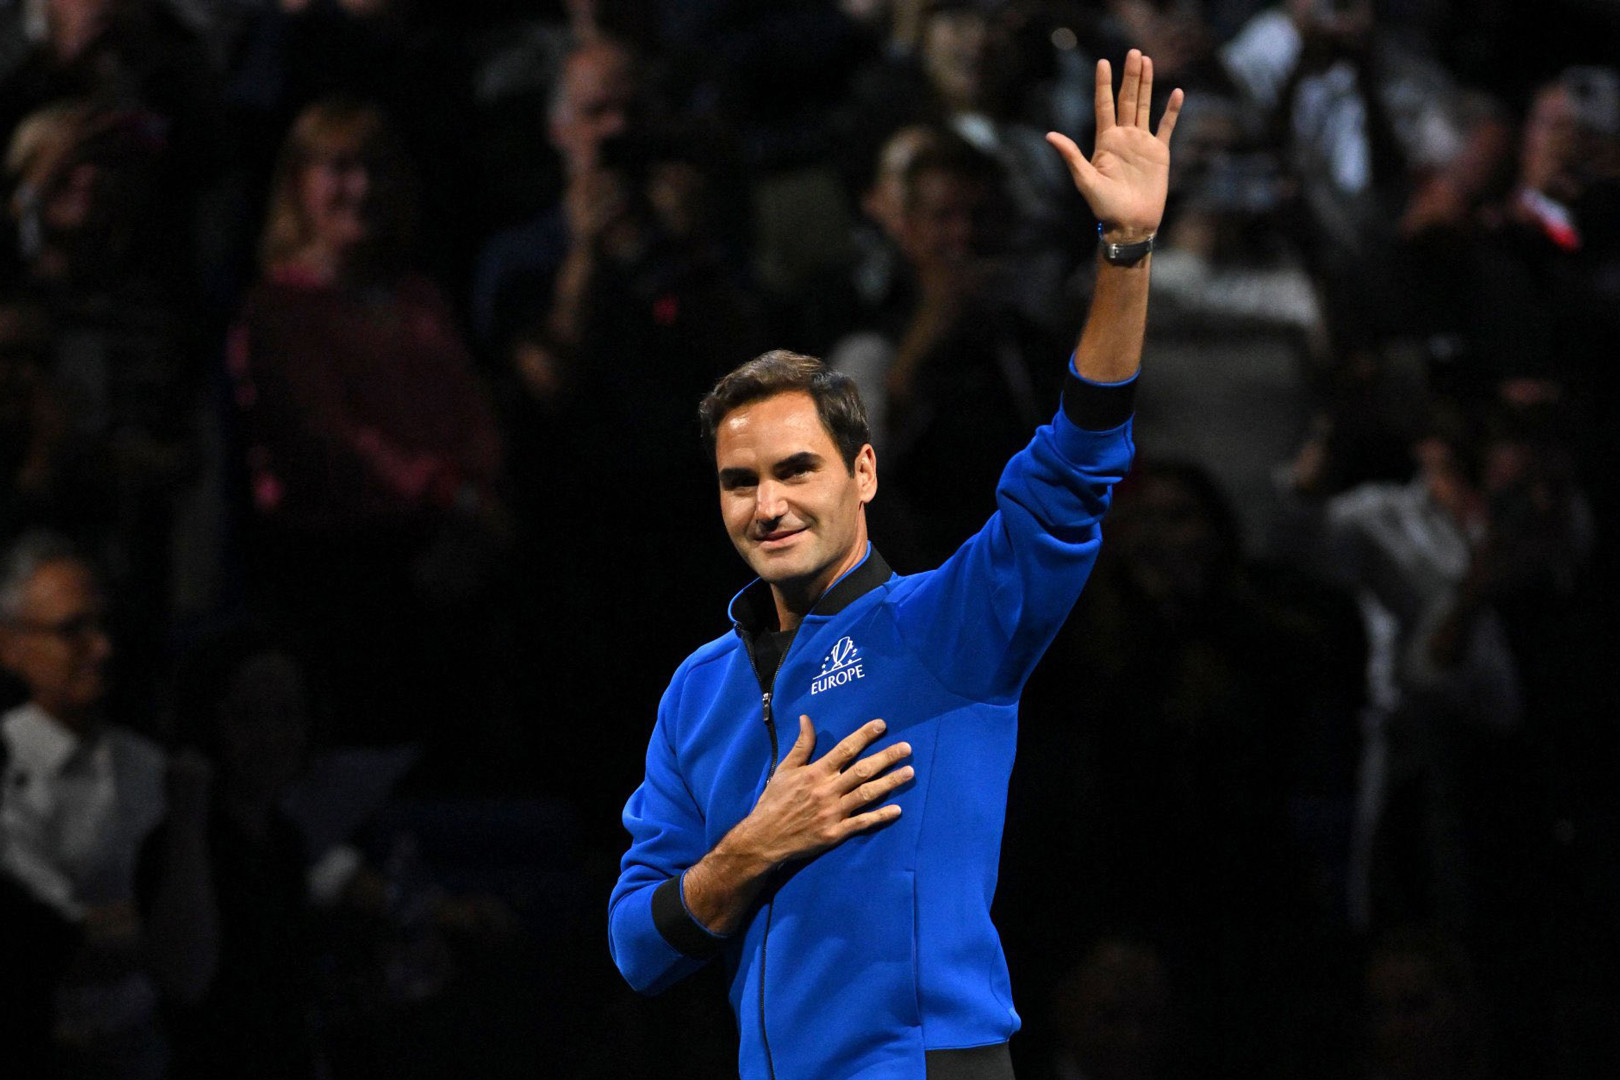 Di sản của Roger Federer